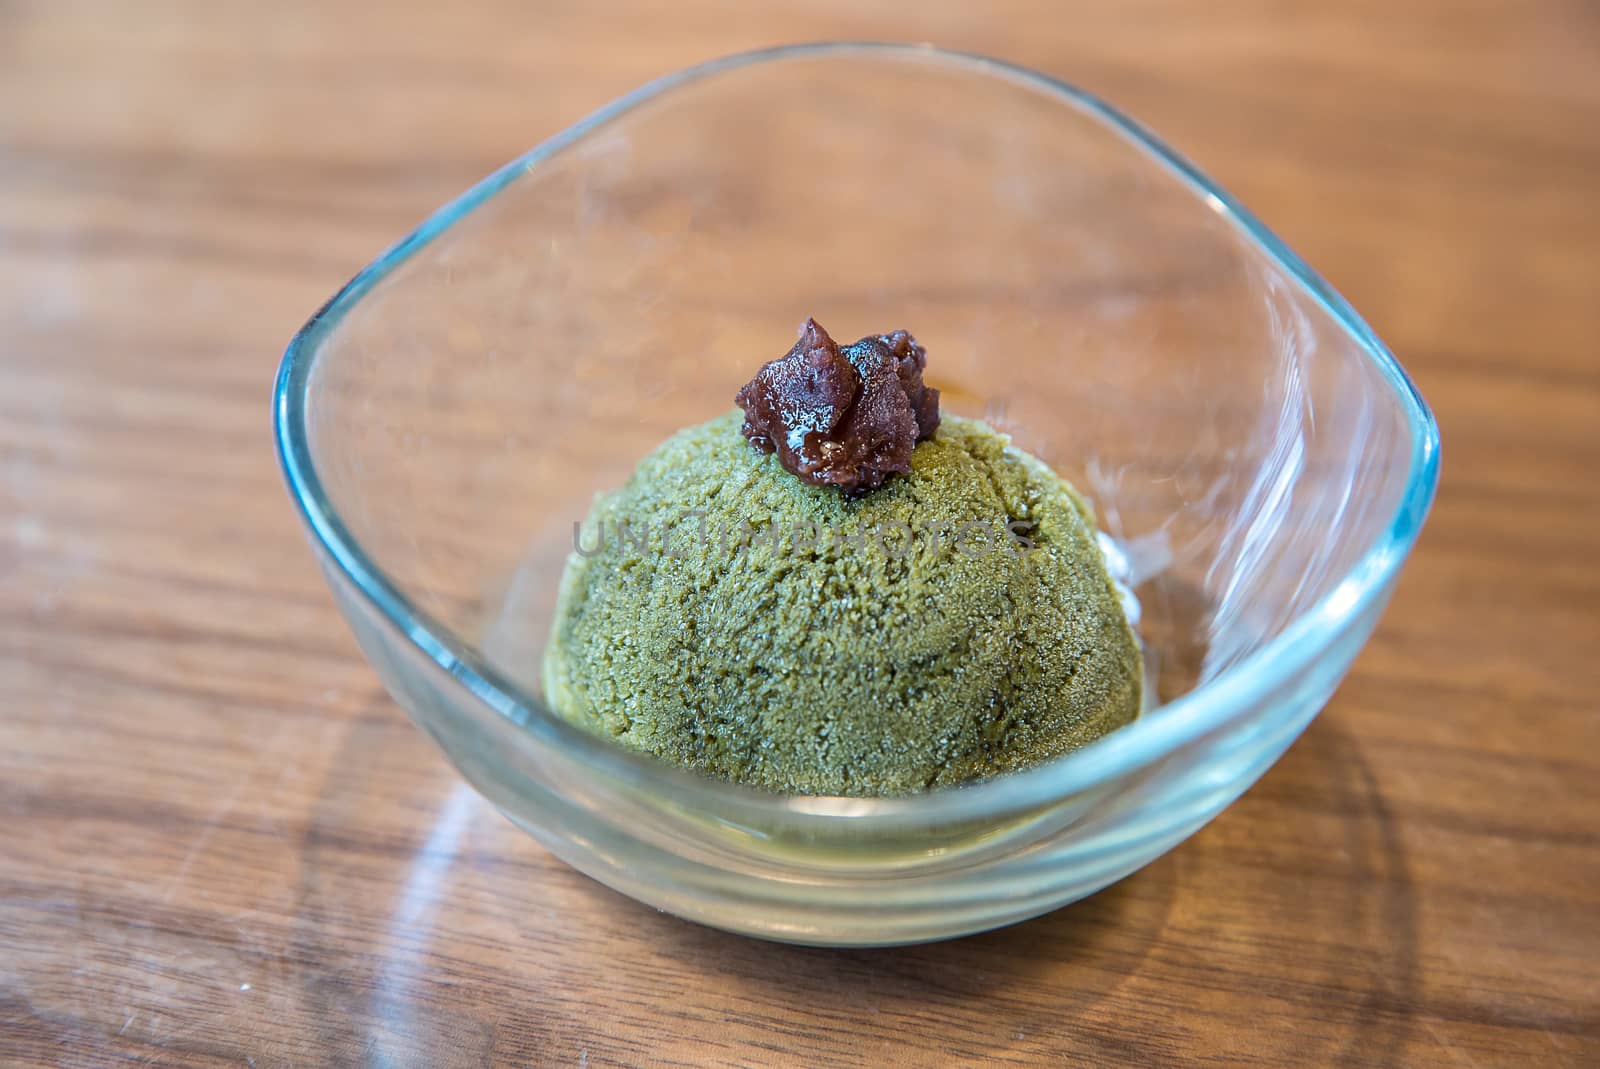 Green tea sherbet ice cream by vichie81